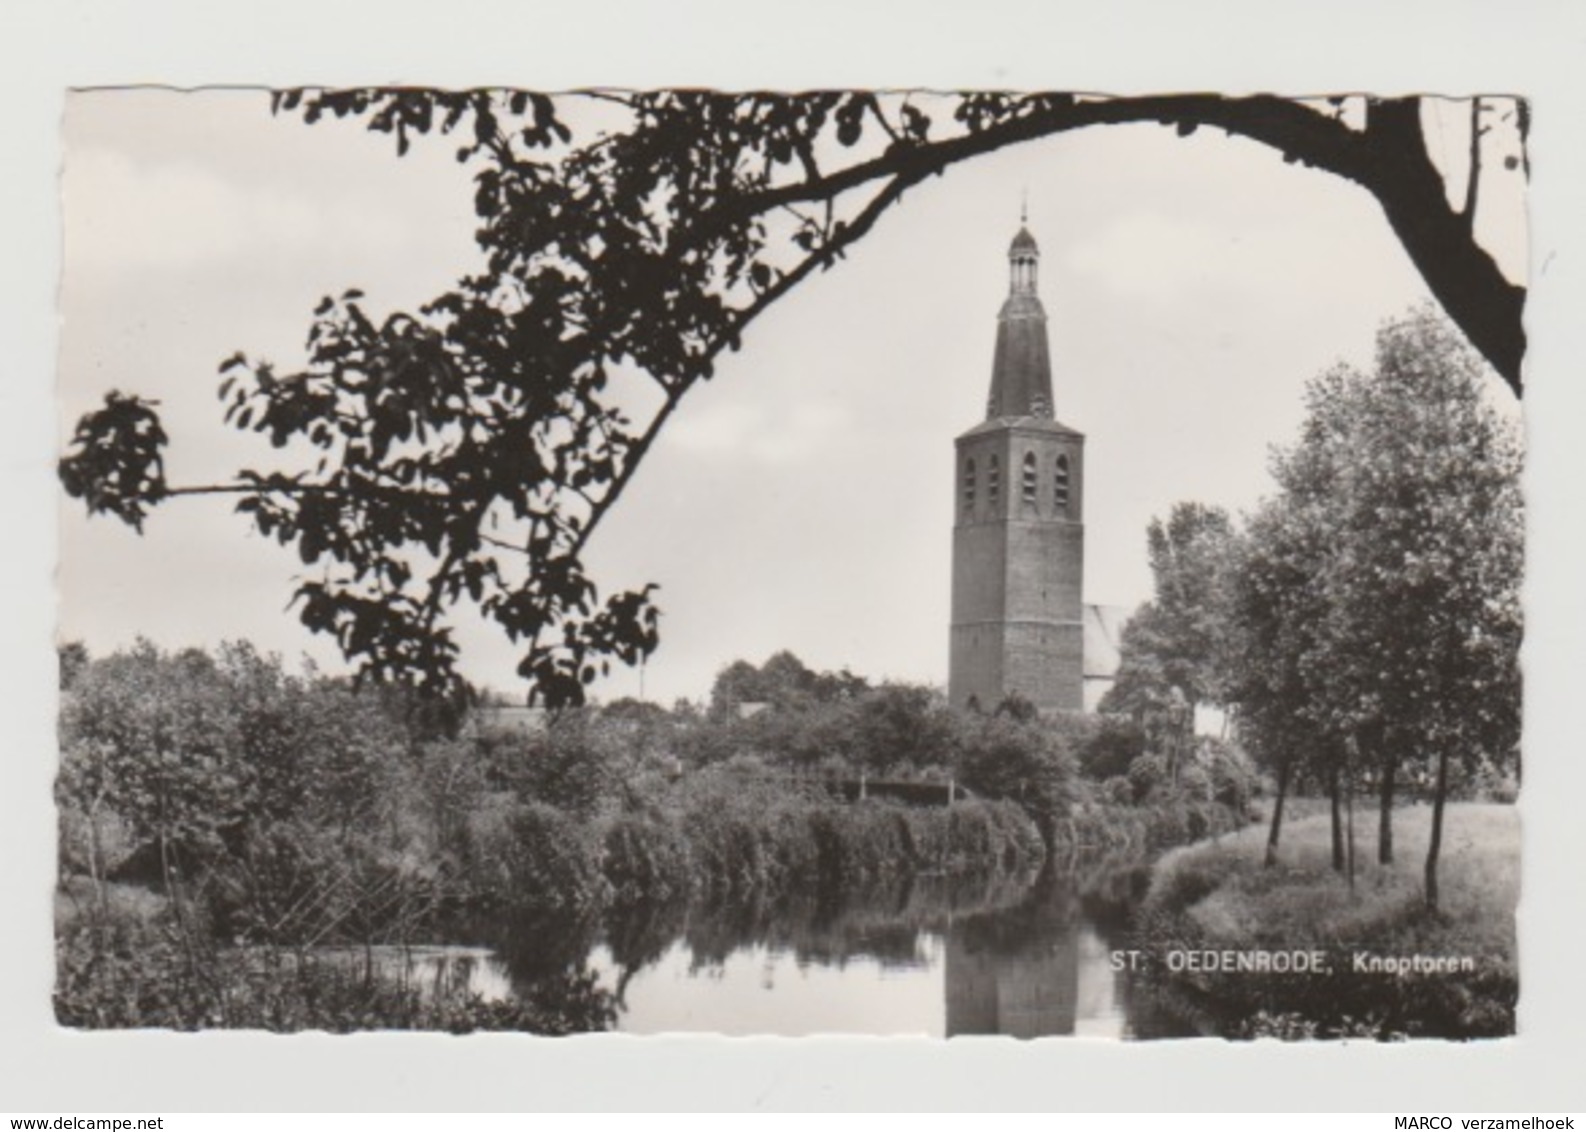 Postcard - Ansichtkaart Knoptoren Sint Oedenrode (NL) - Veghel